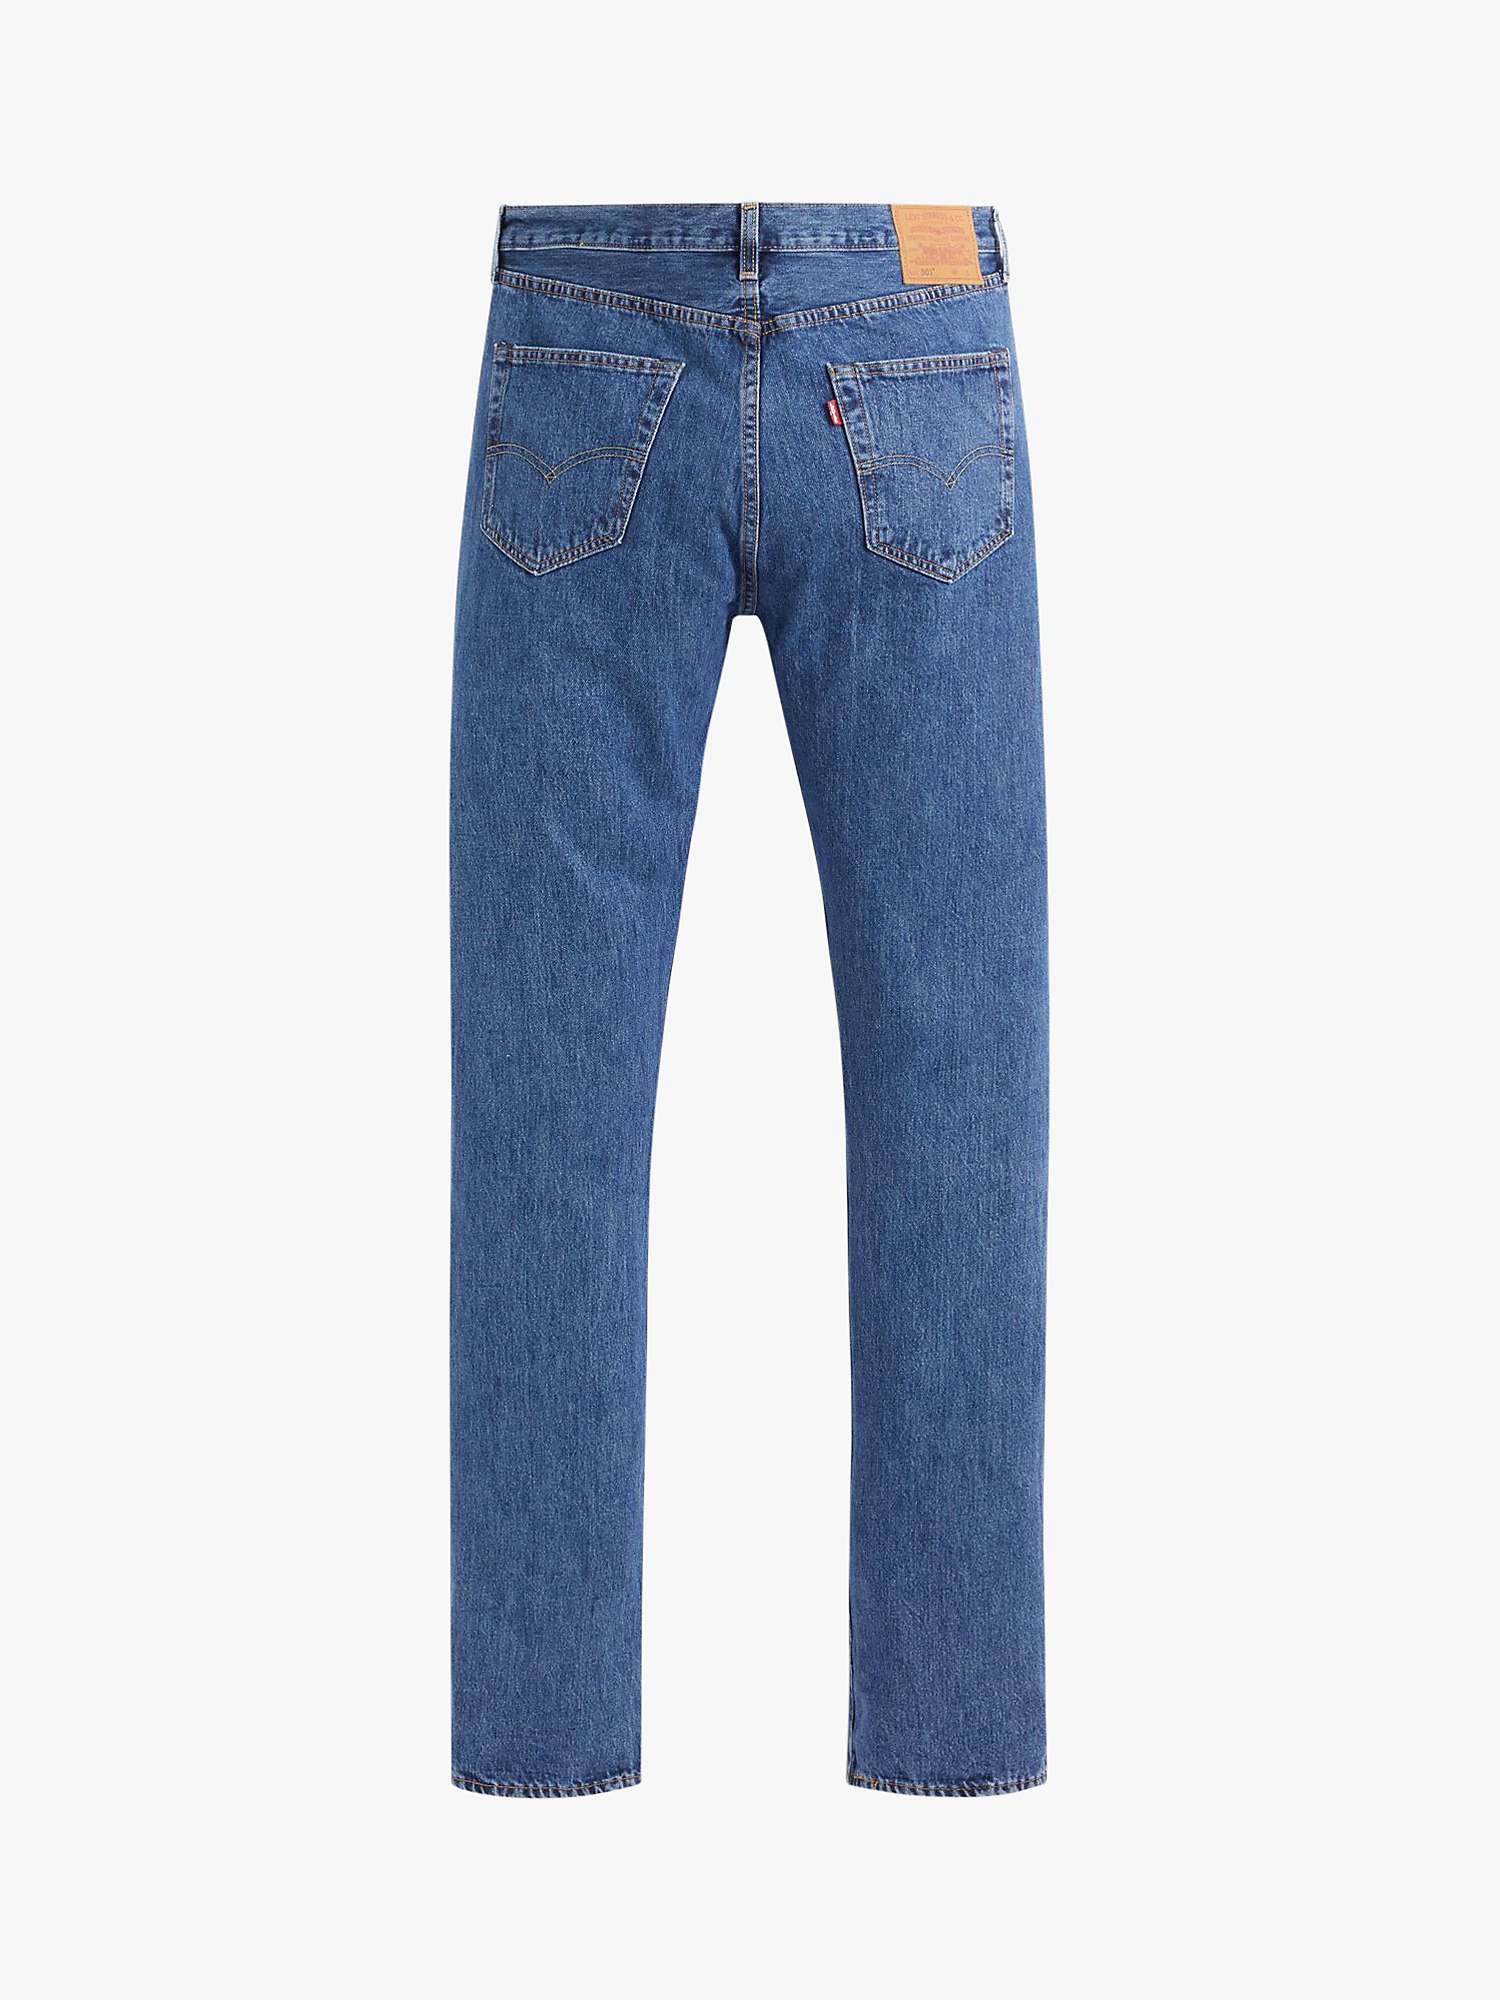 Buy Levi's Big & Tall 501 Original Straight Jeans, Stonewash Online at johnlewis.com